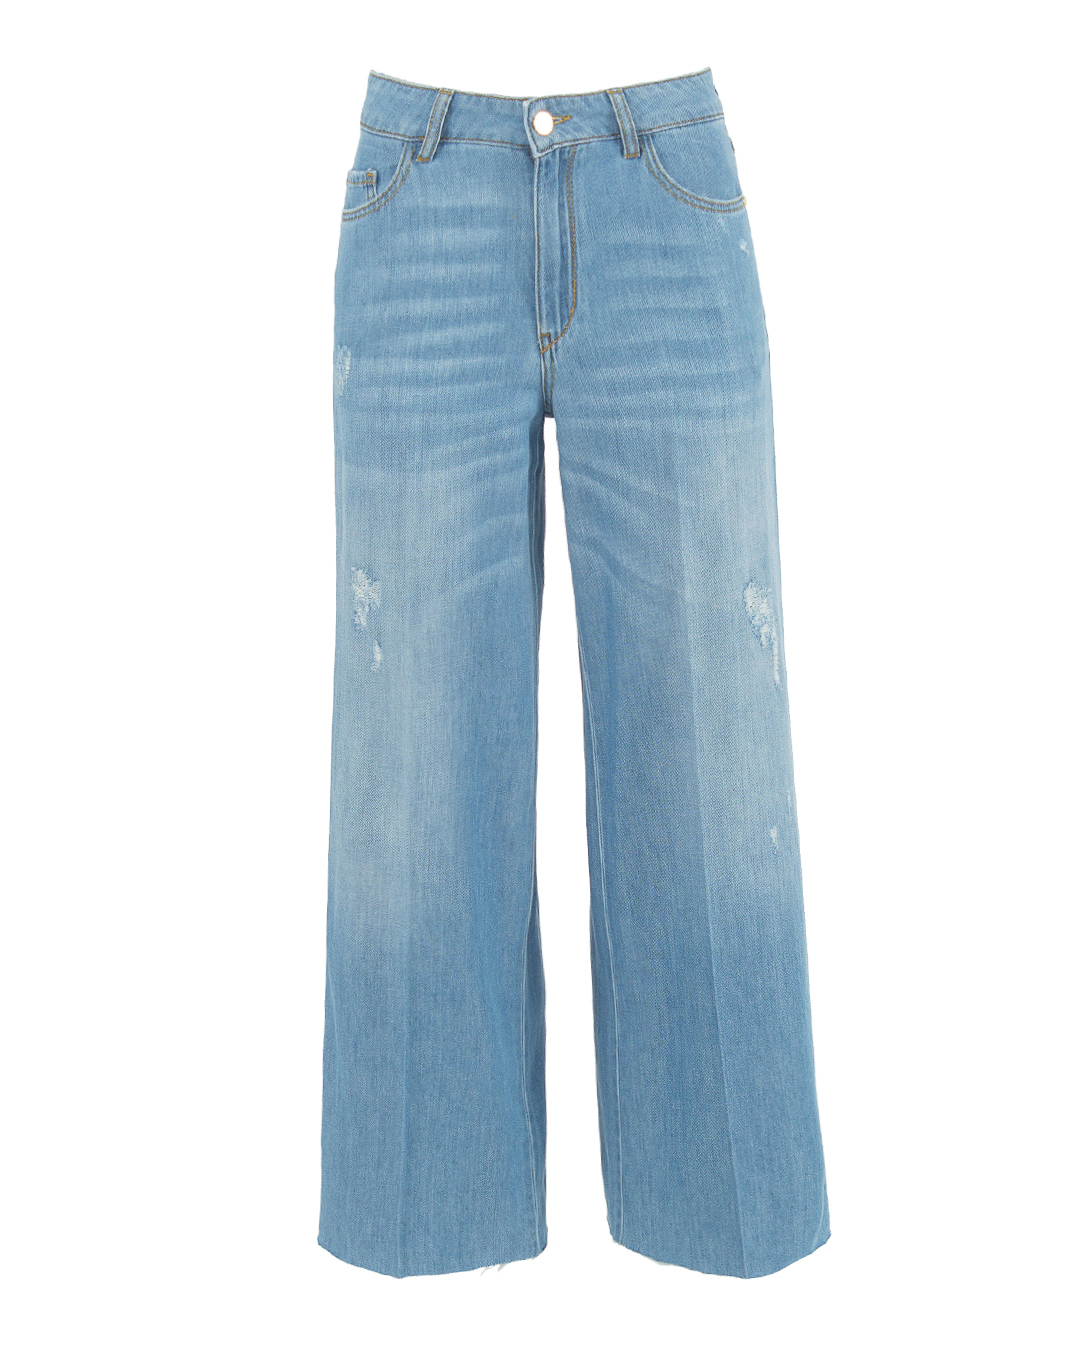 джинсы KAOS PP6NA001 синий 26, размер 26 - фото 1